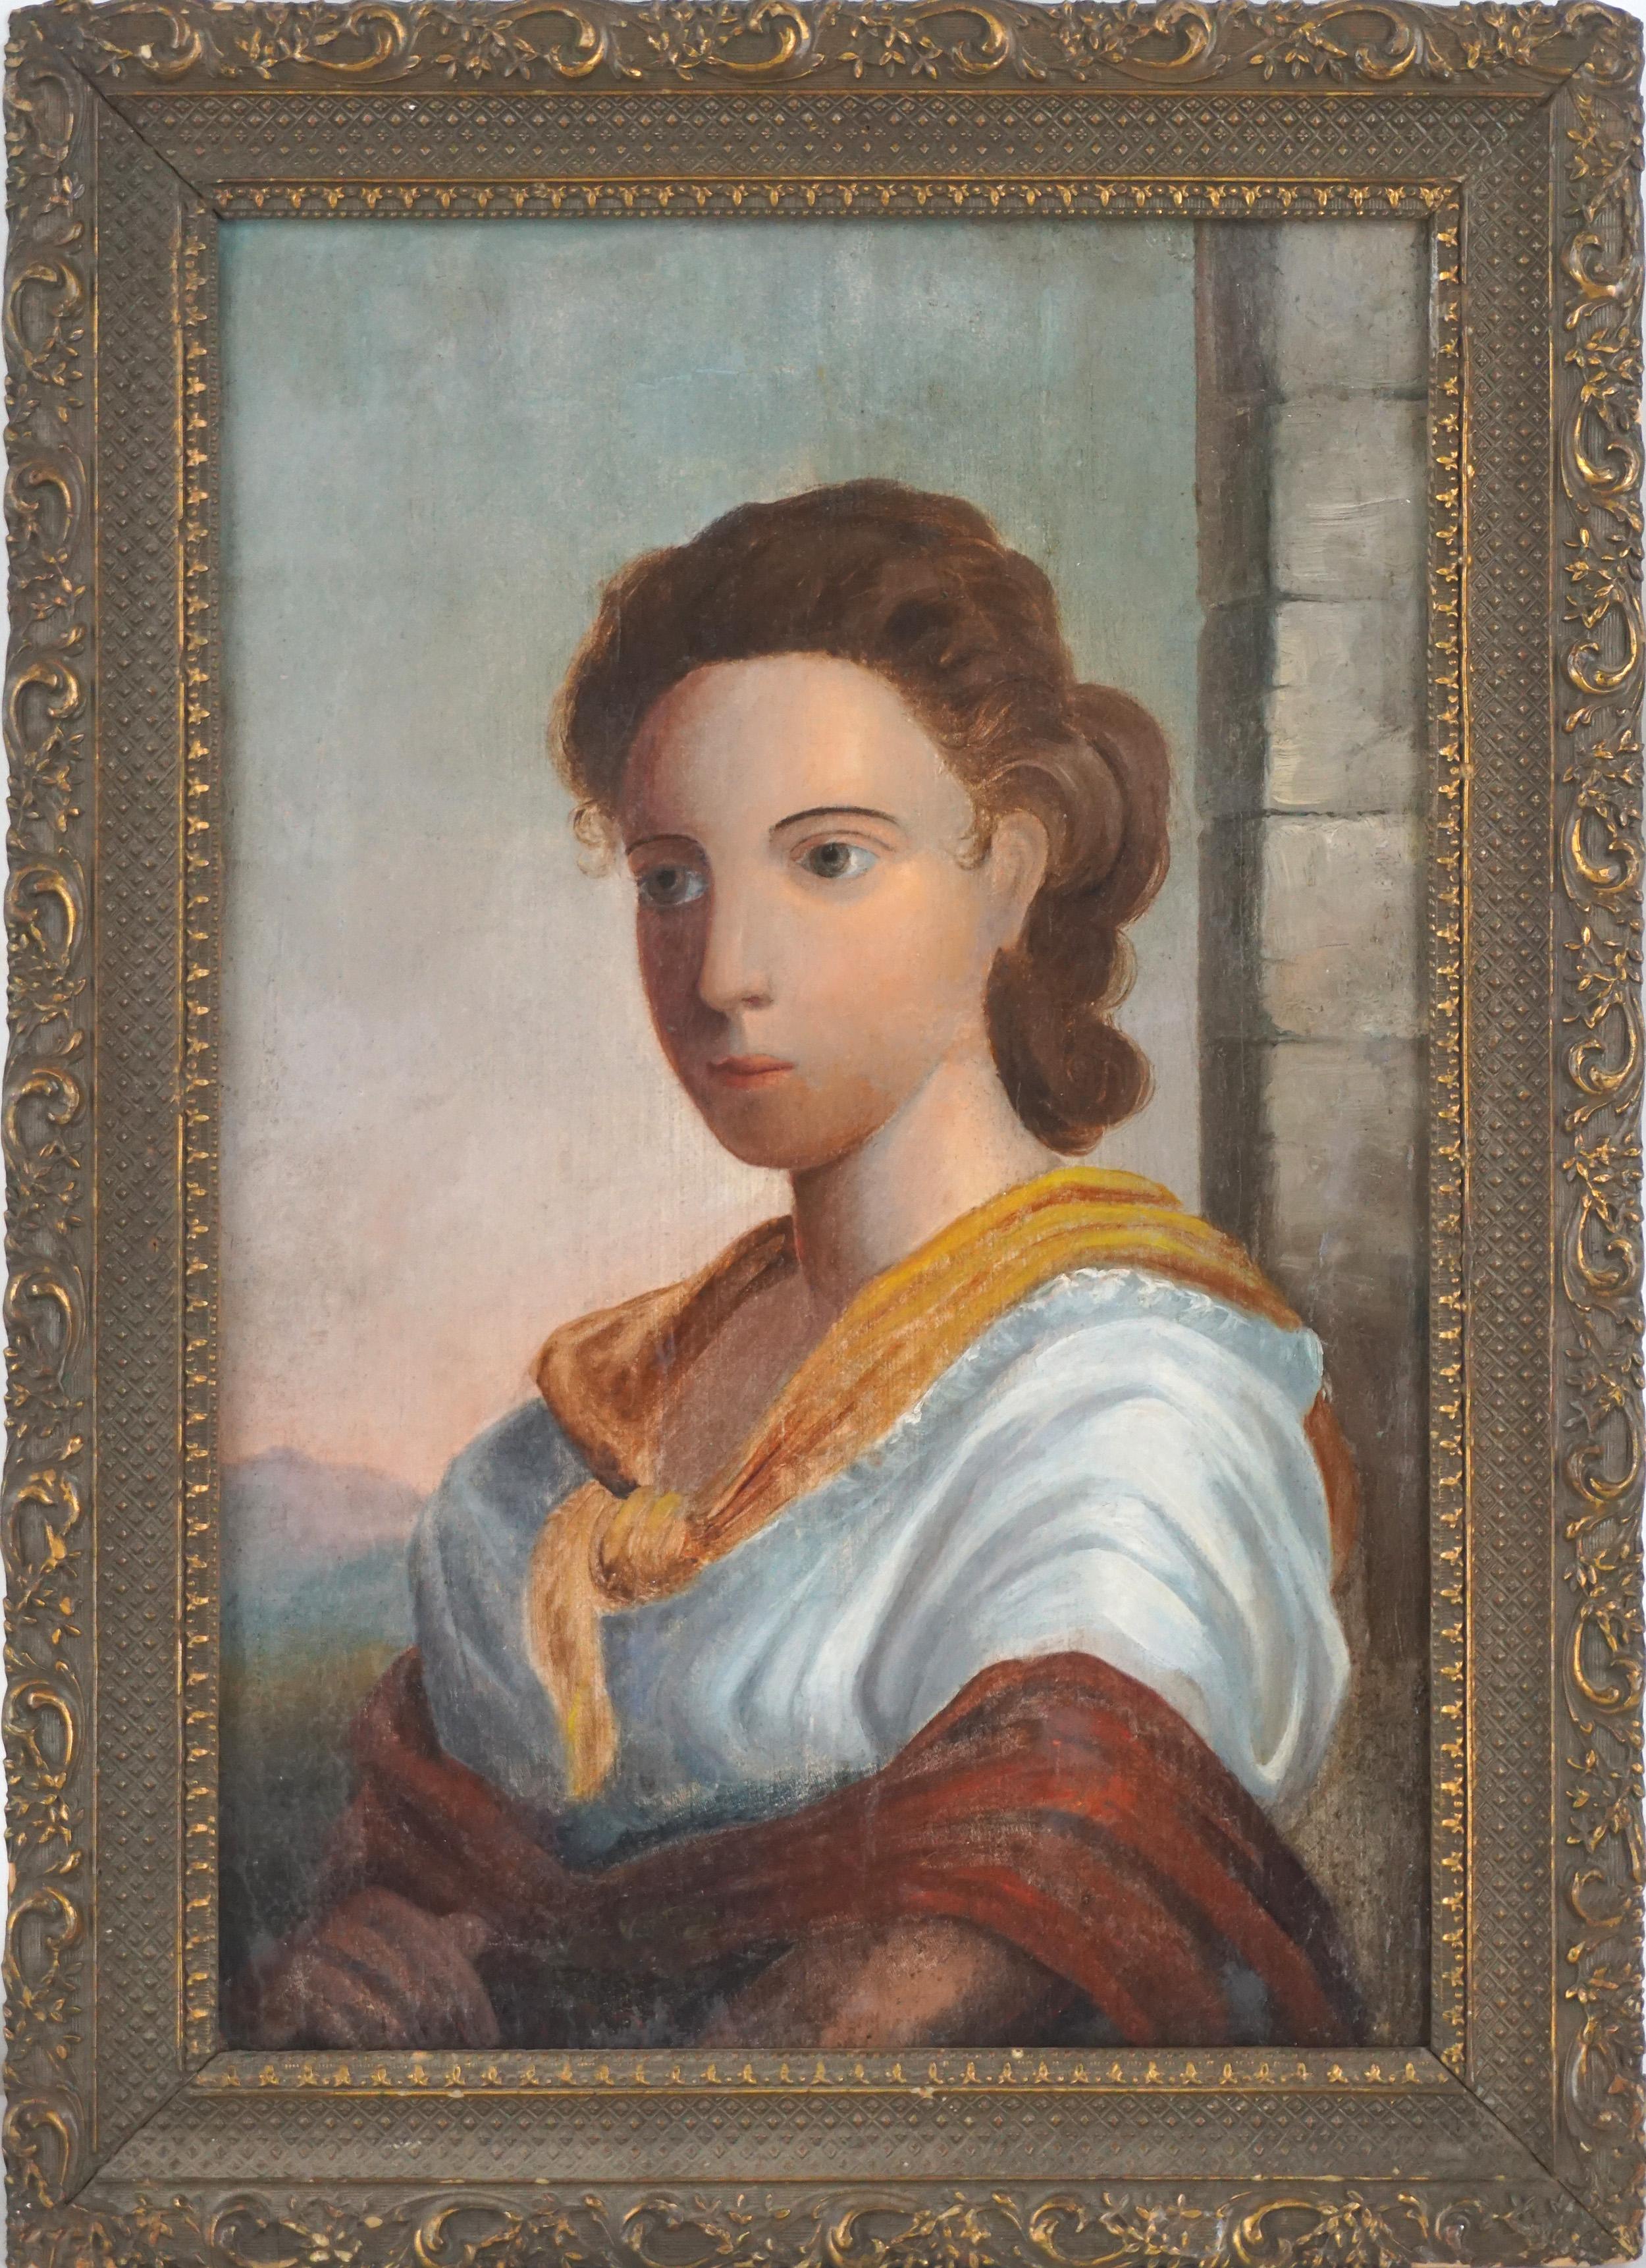 Unknown Portrait Painting - 19th Century Italian School Portrait of Peasant Girl